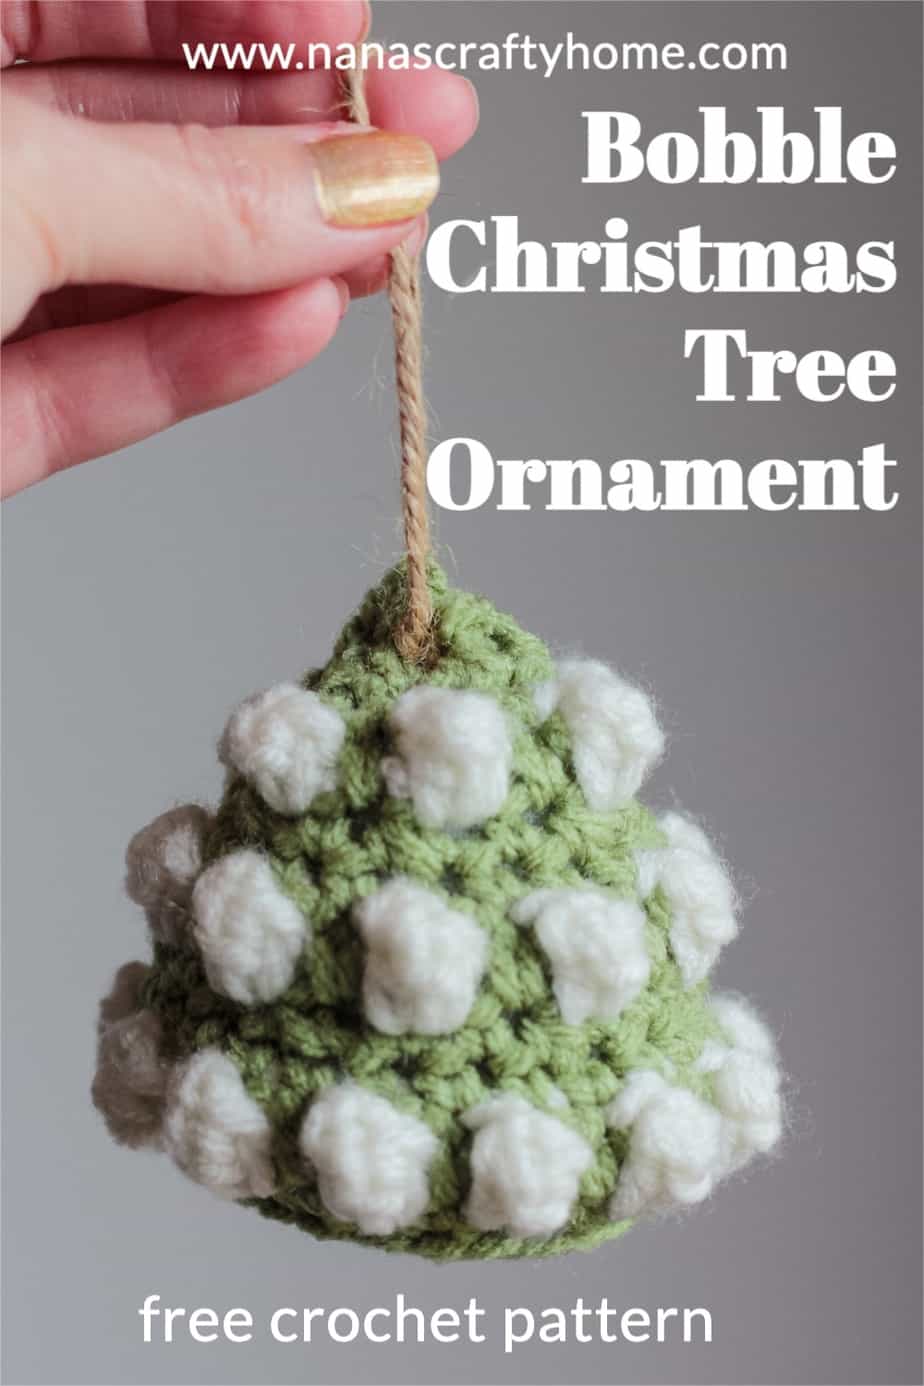 Crochet bobble Christmas Tree Ornament pattern